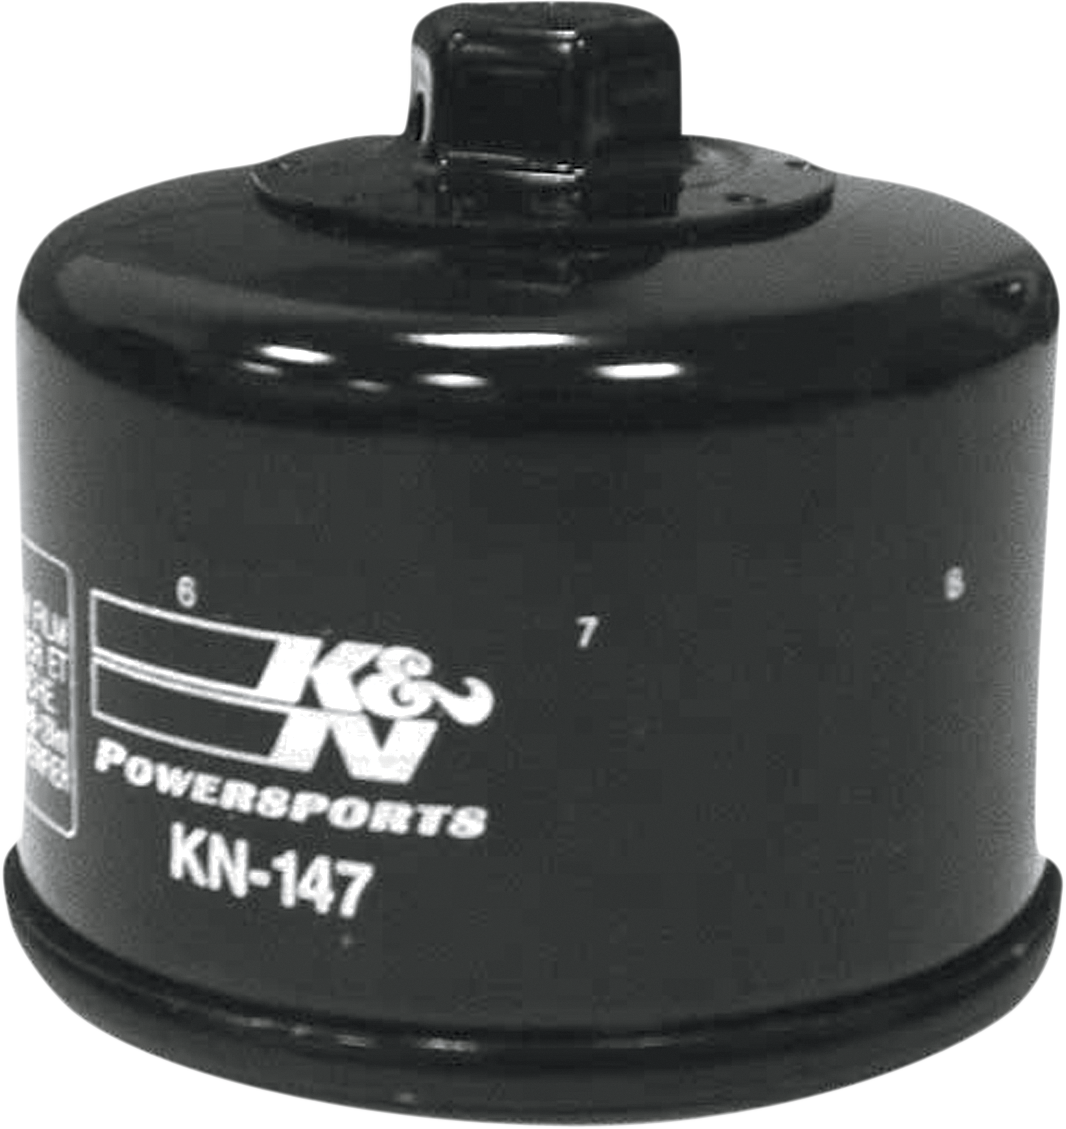 K & N Oil Filter IF 4 YAMAHA SNOW SEE TECH KN-147